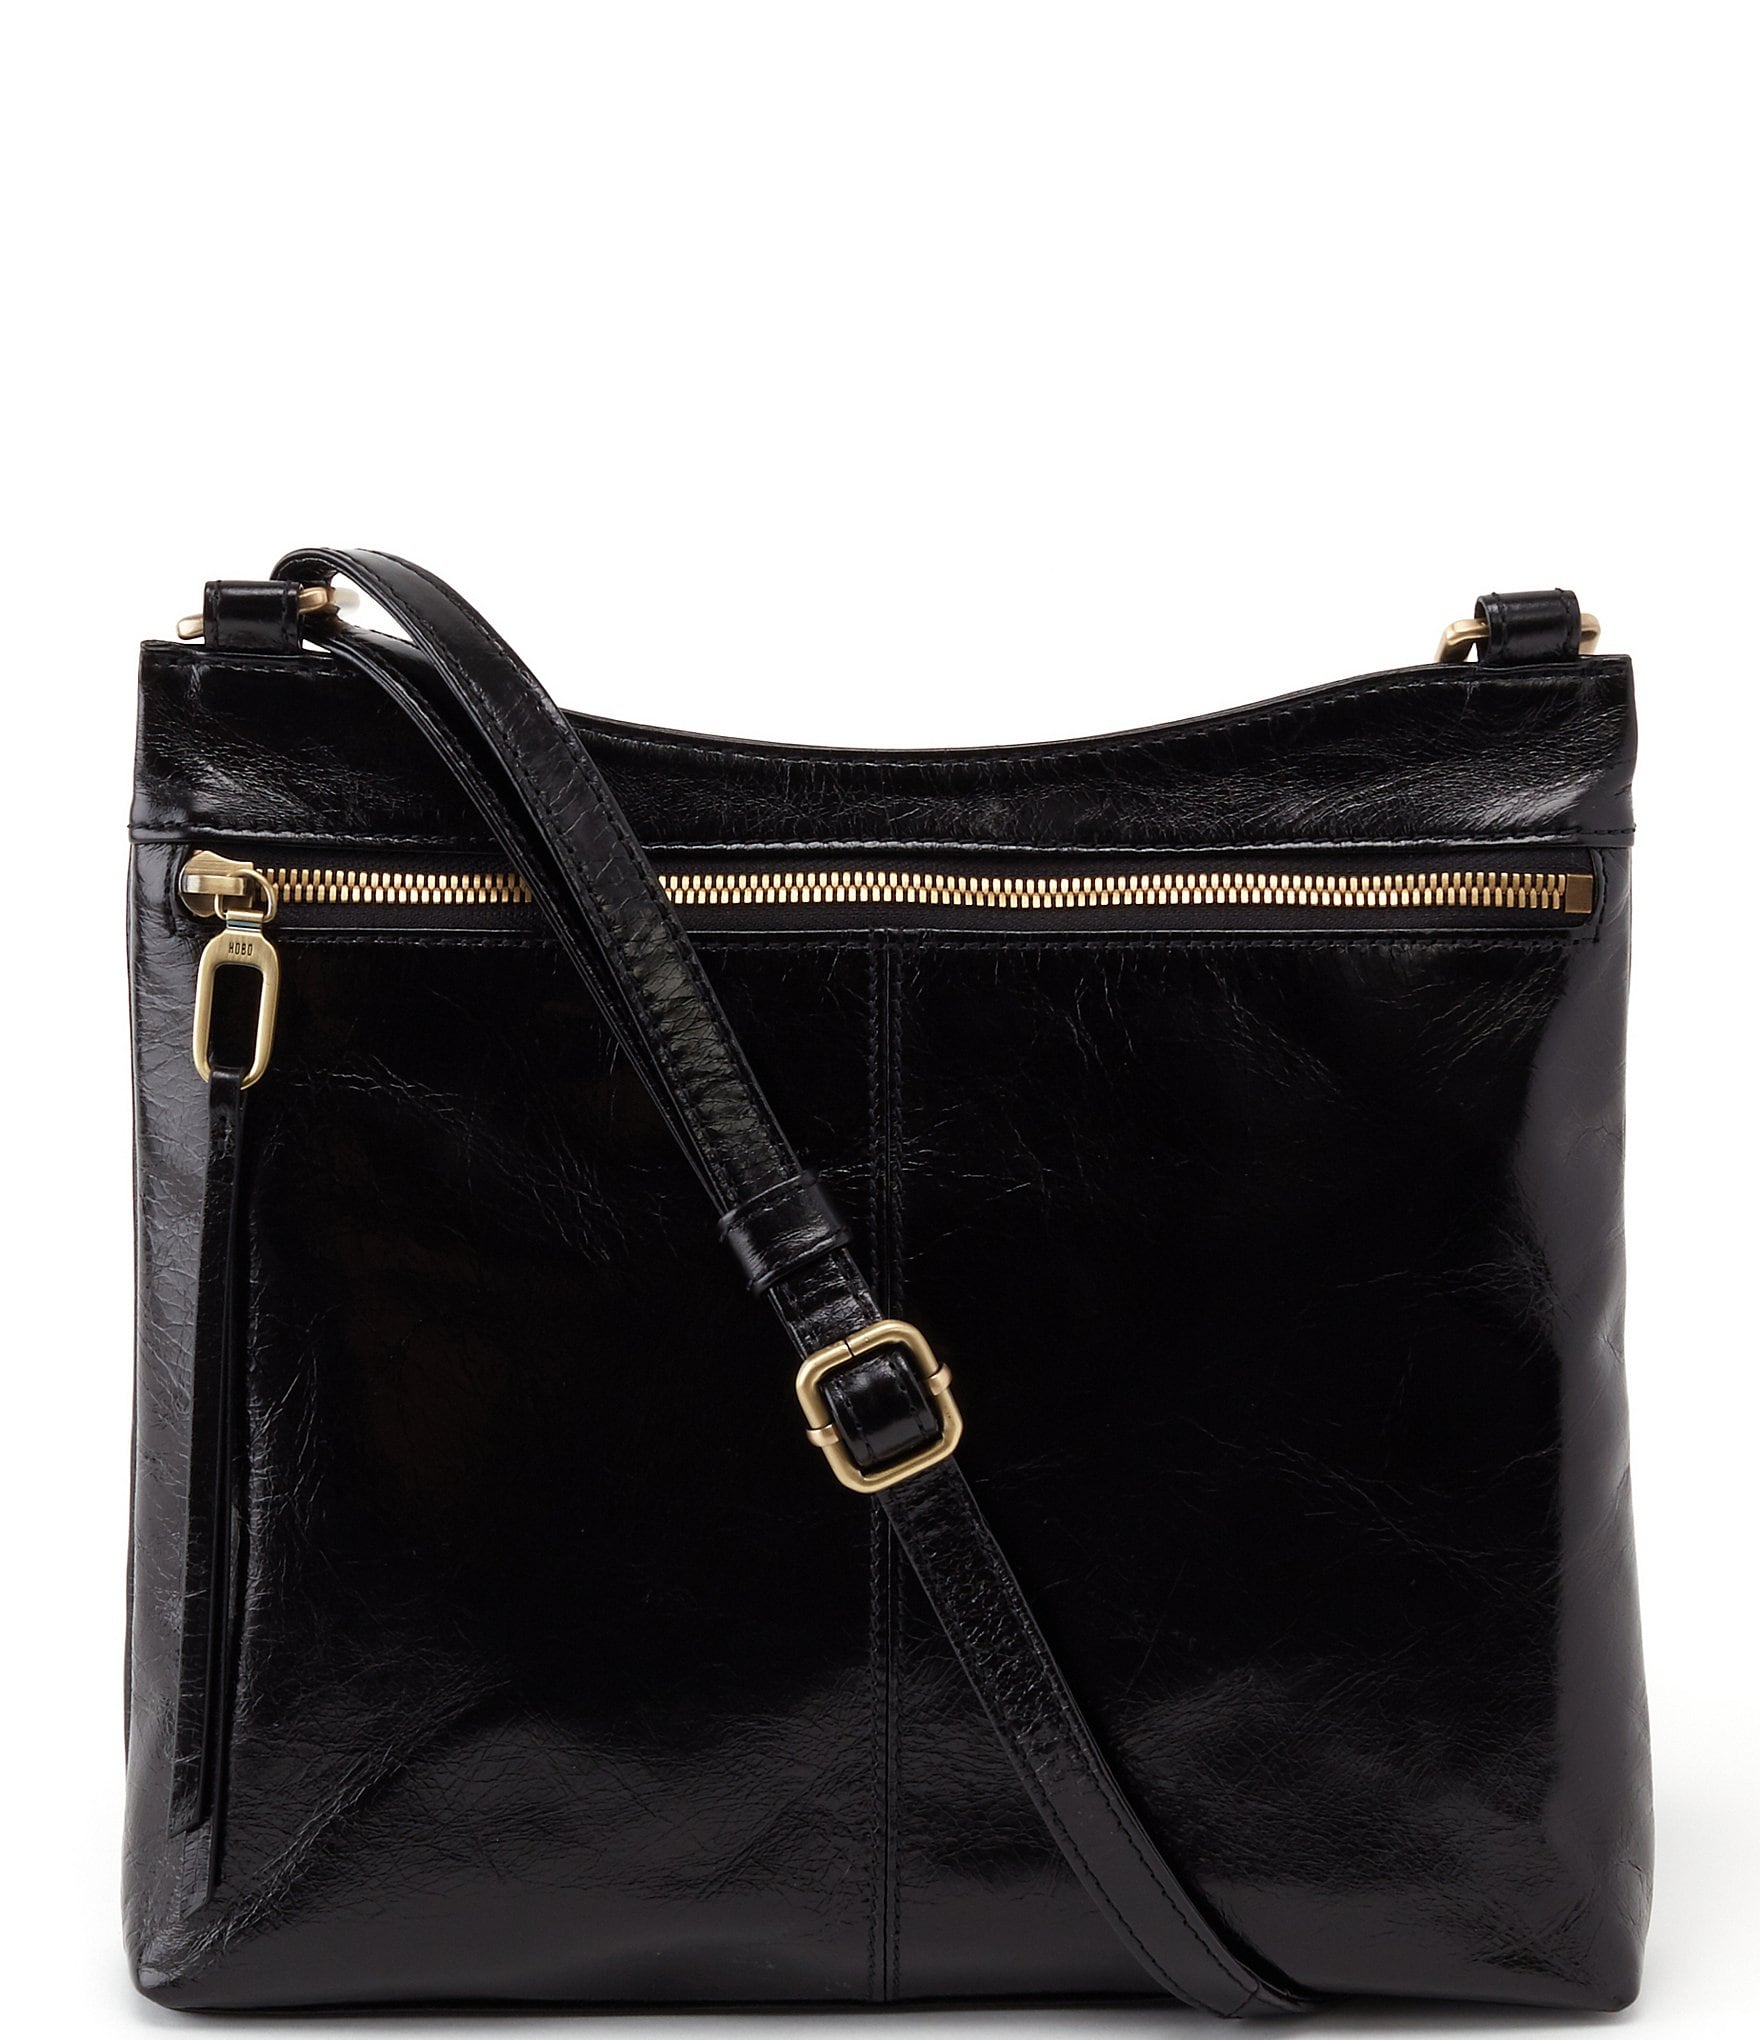 Vintage Crossbody Bag For Women, Large Capacity Hobo Bag, Fashion